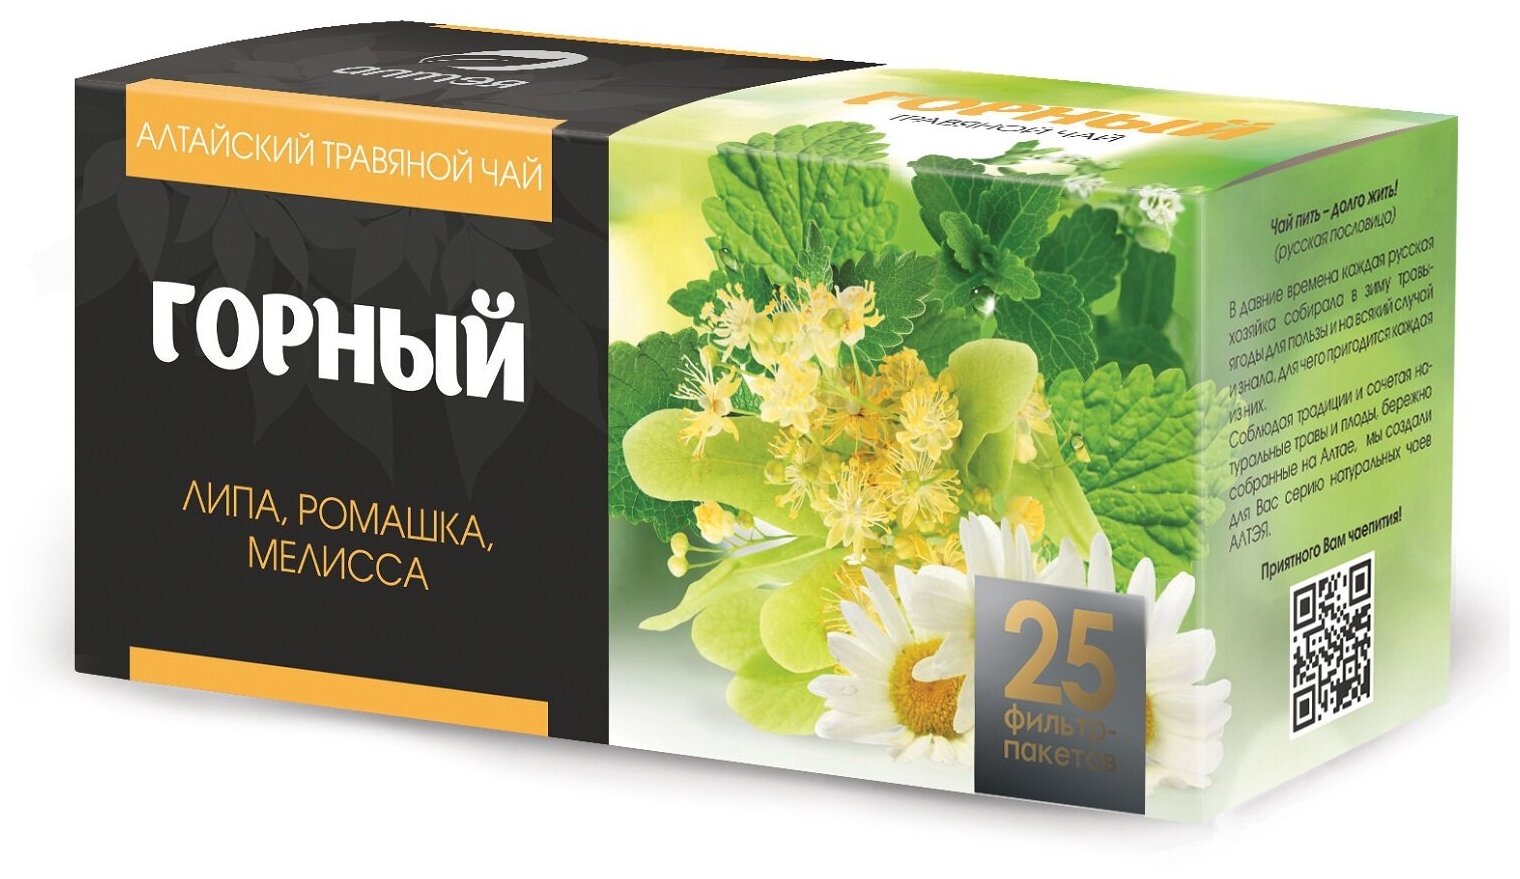 Травяной чай алтэя "Горный", 25 фильтр-пакетов х 1,2 г